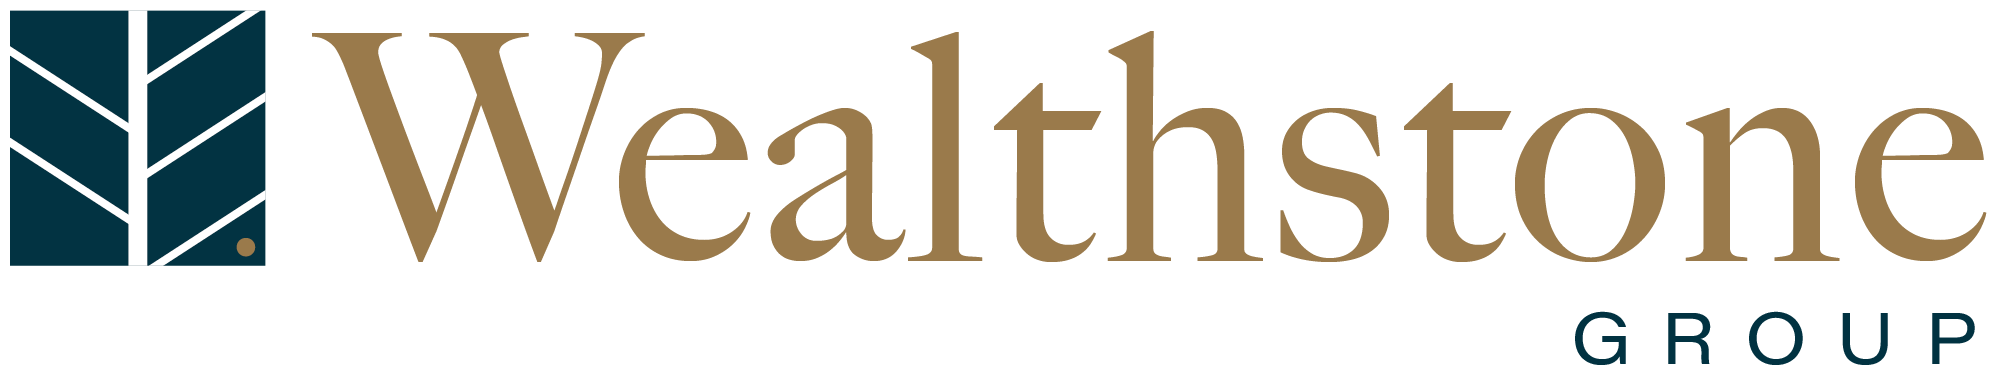 Wealthstone-logo-gold